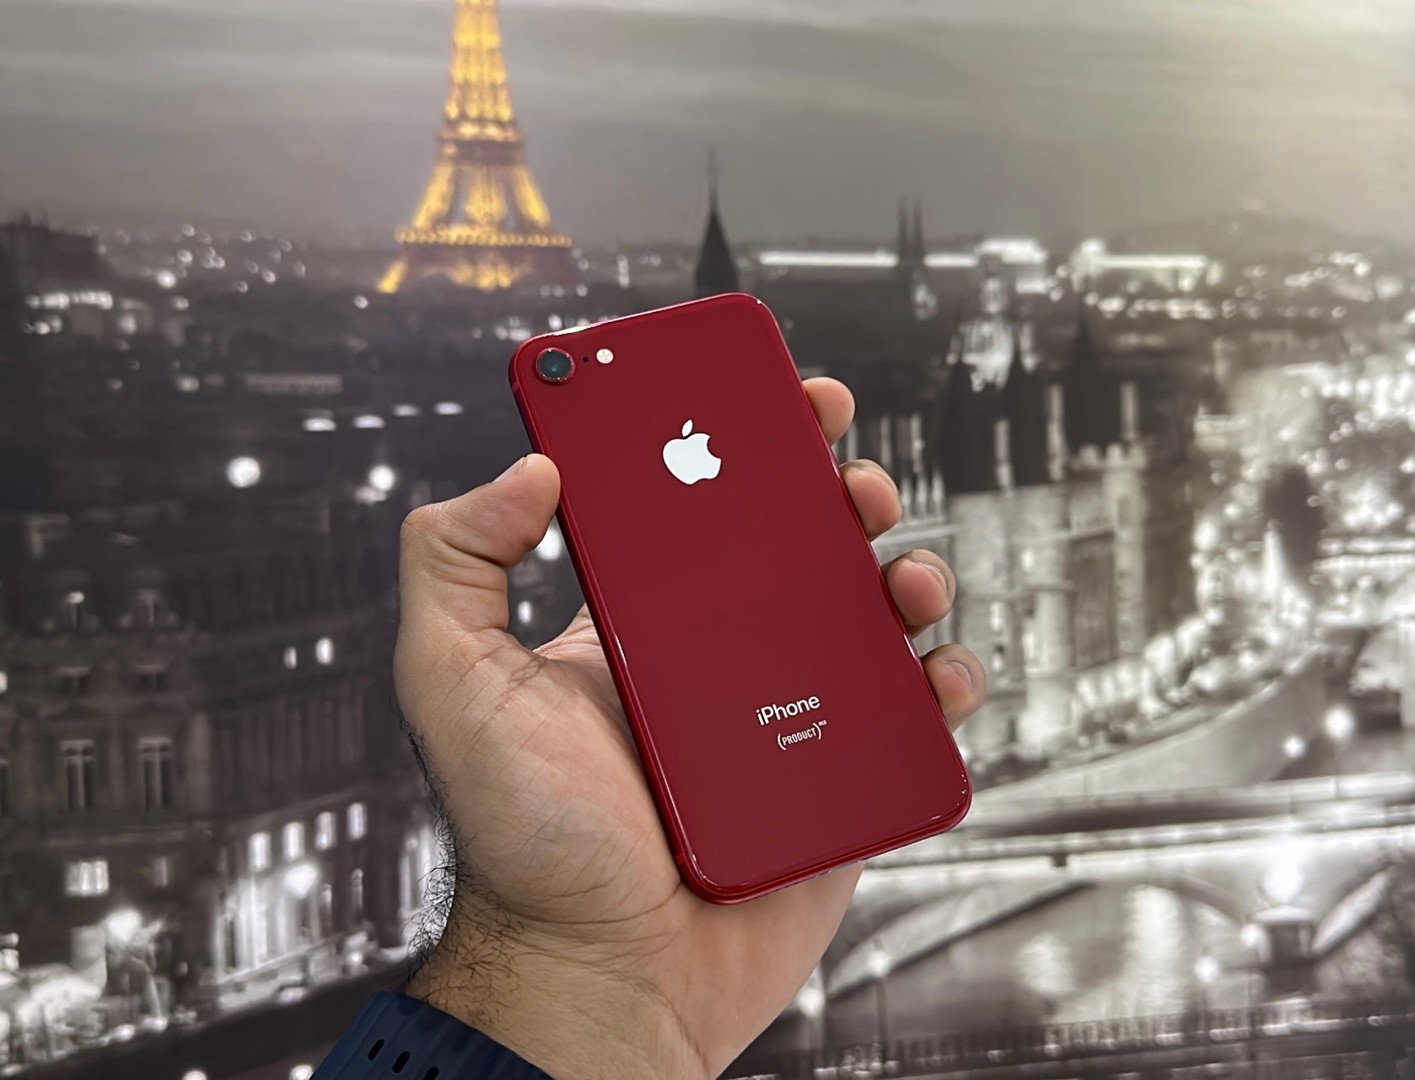 Vendo iPhone 8 64GB Red (Product )Como Nuevo, Desbloqueado,Garantía, $ 7,900 NEG